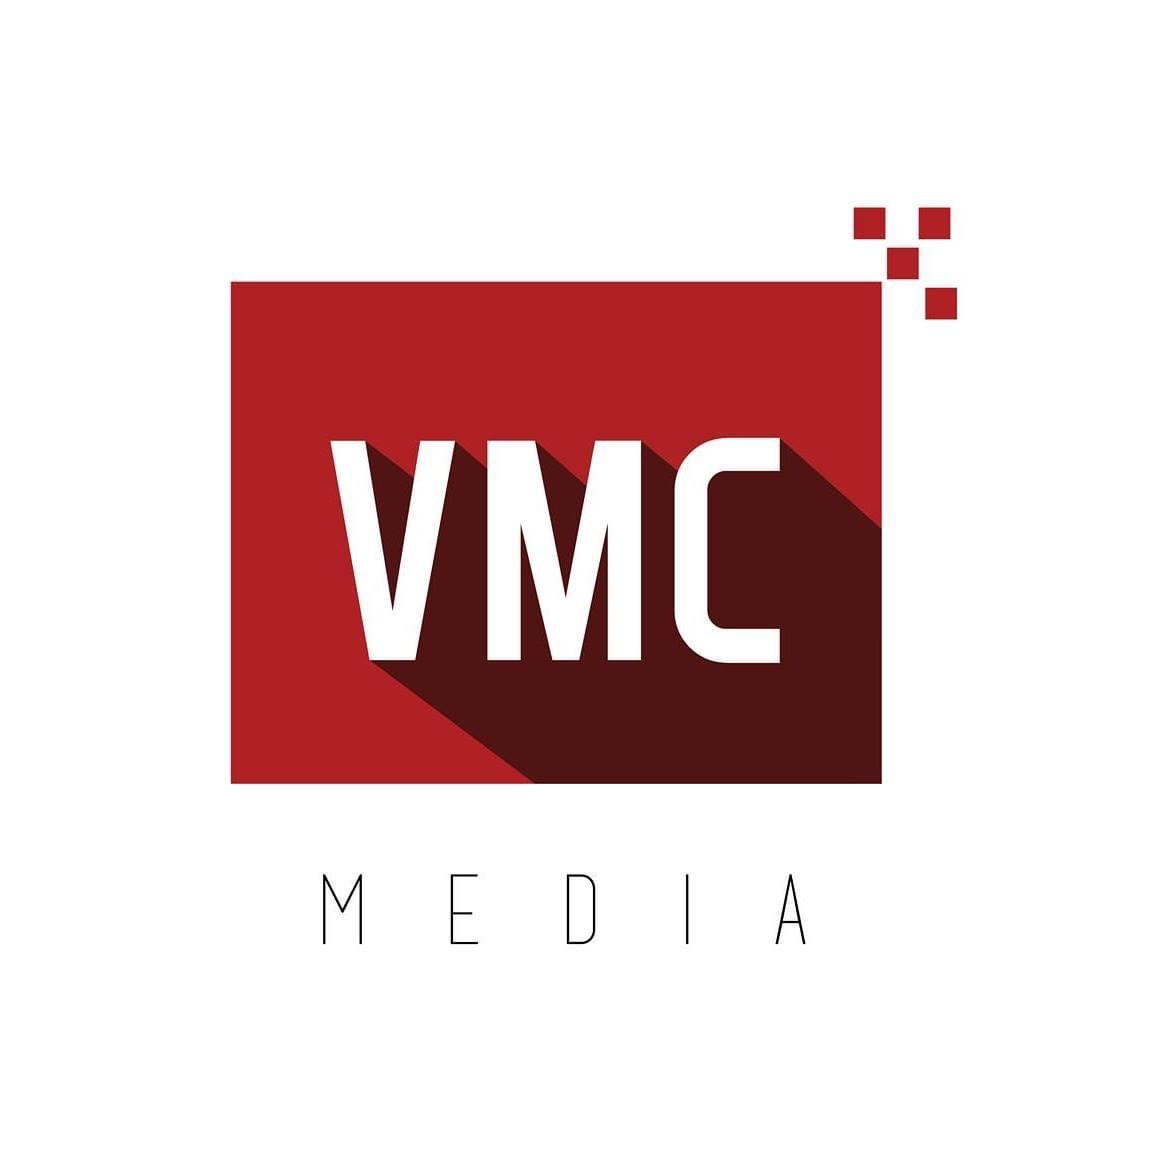 VMC Media SG's images